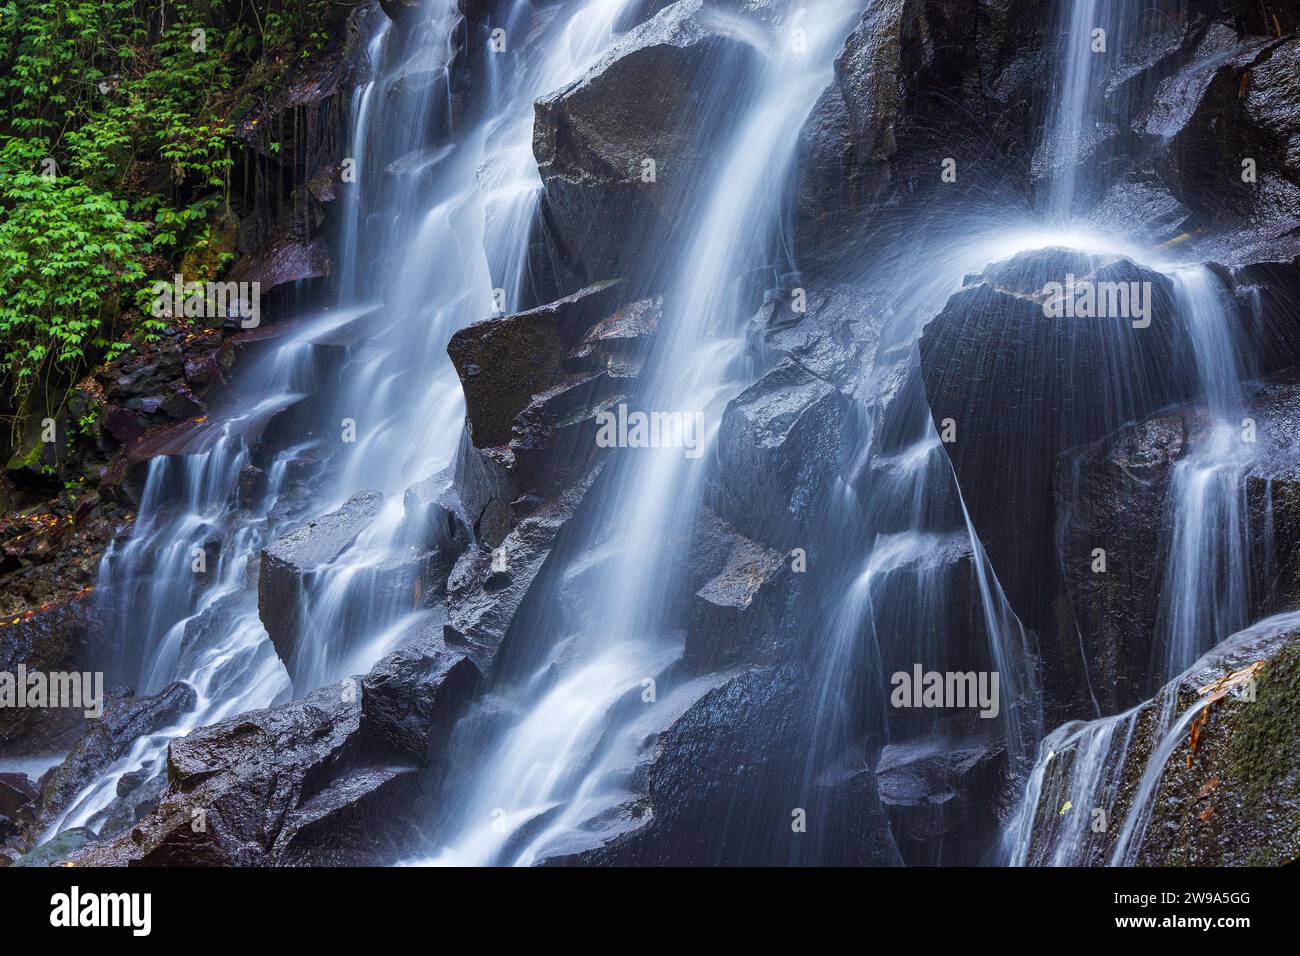 Kanto Lampo waterfall in Bali, Indonesia Stock Photo